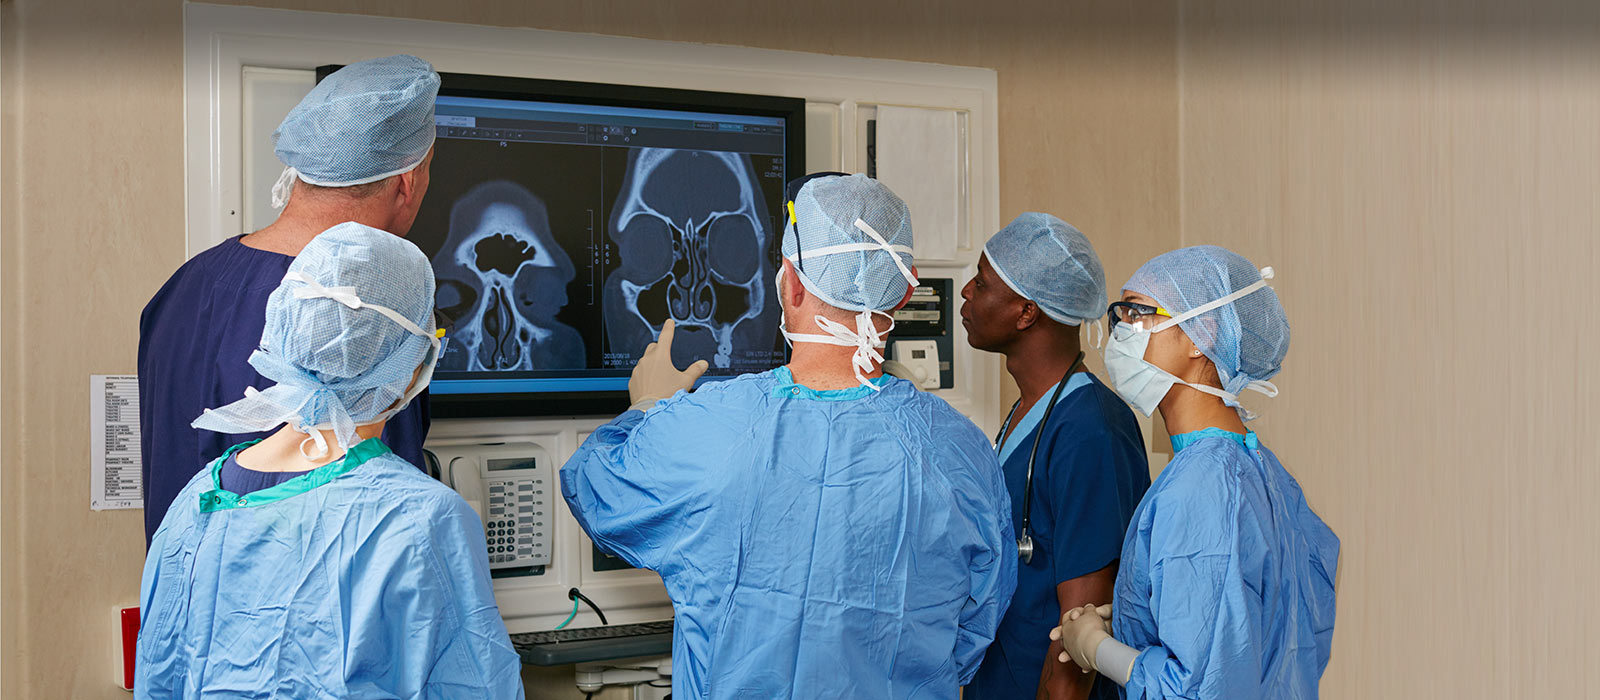 Neurosurgeons reviewing images